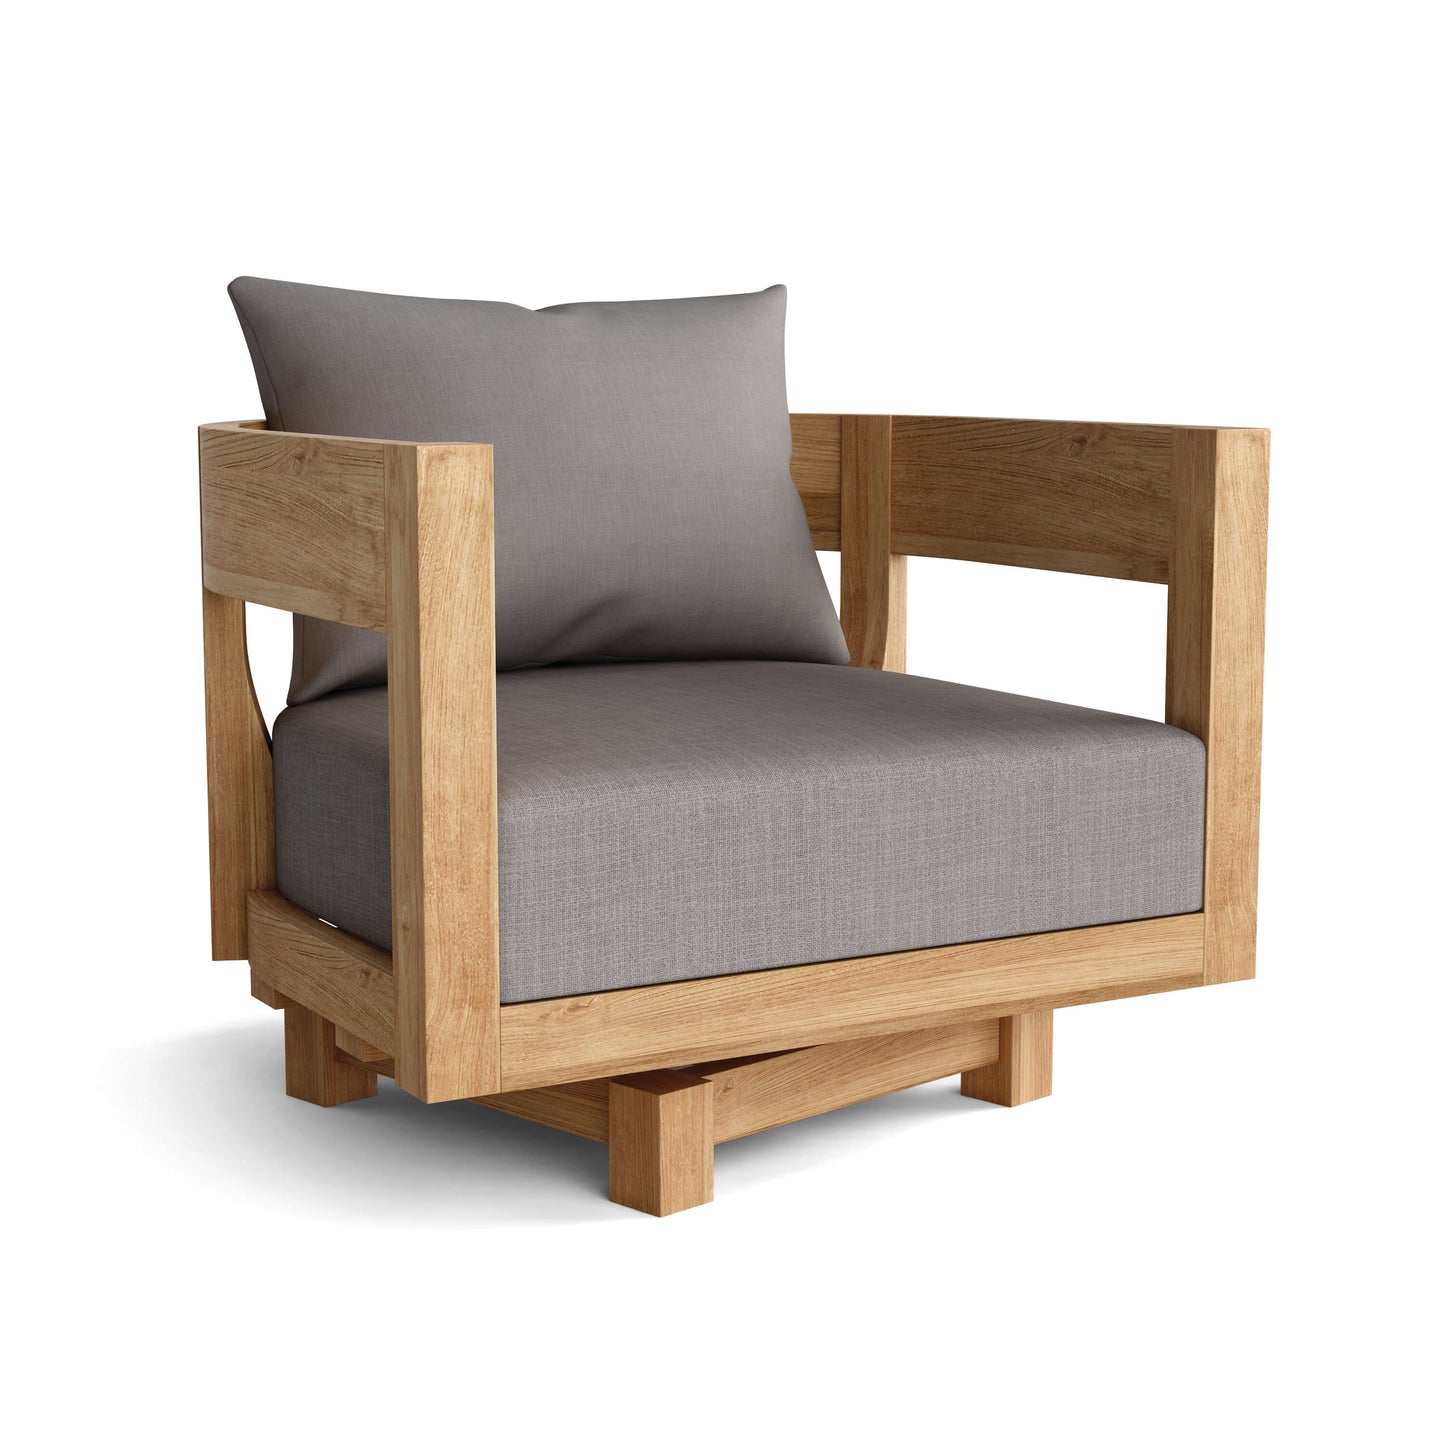 Coronado 6-Piece Deep Seating Set (includes cushions) - Addison Foster